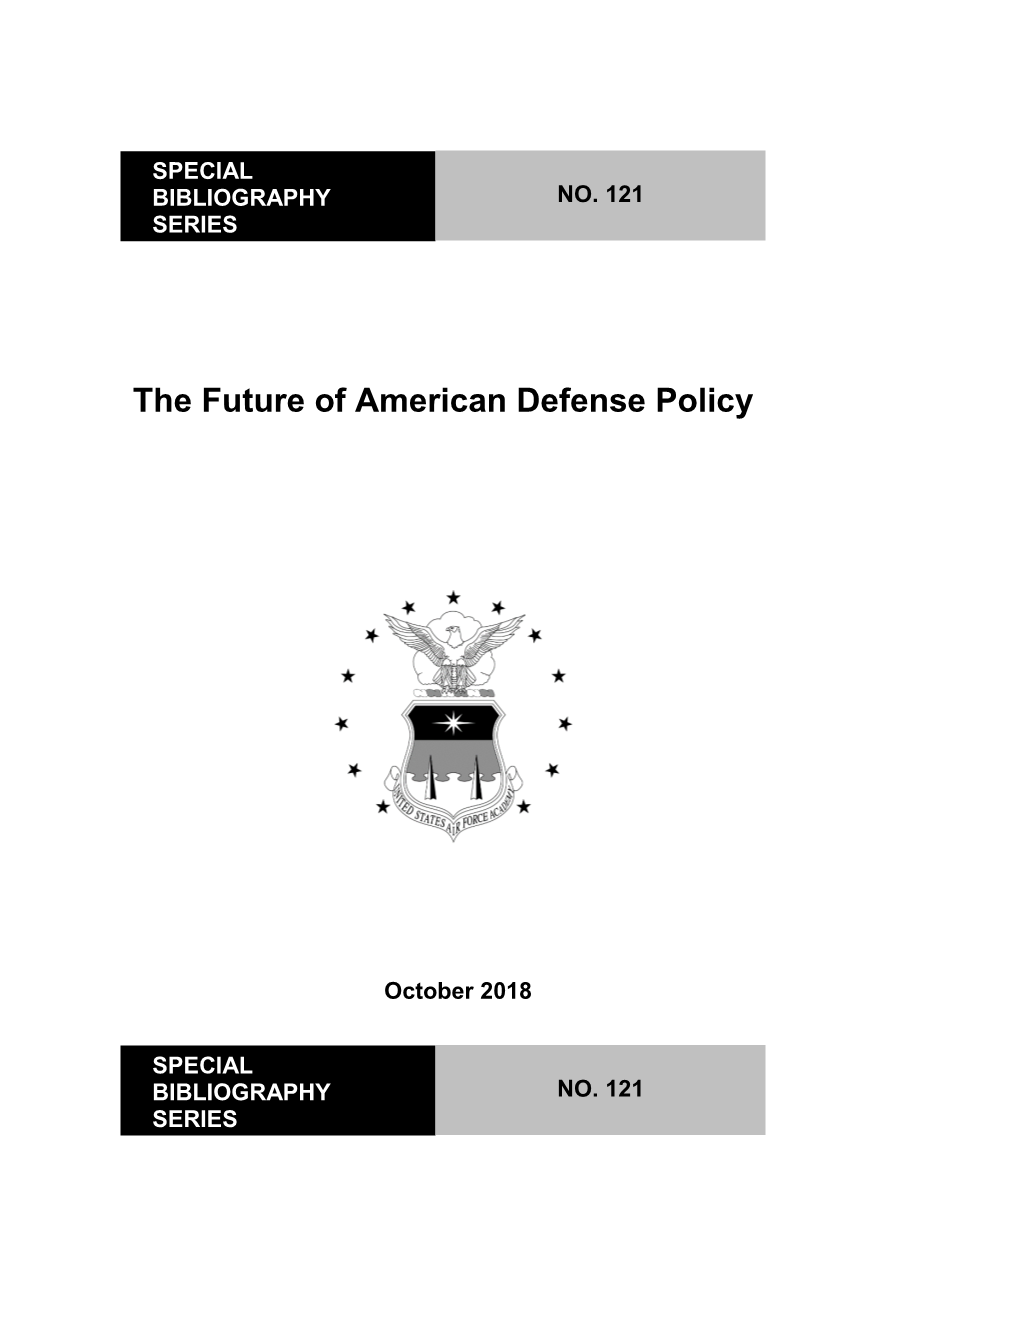 The Future of American Defense Policy